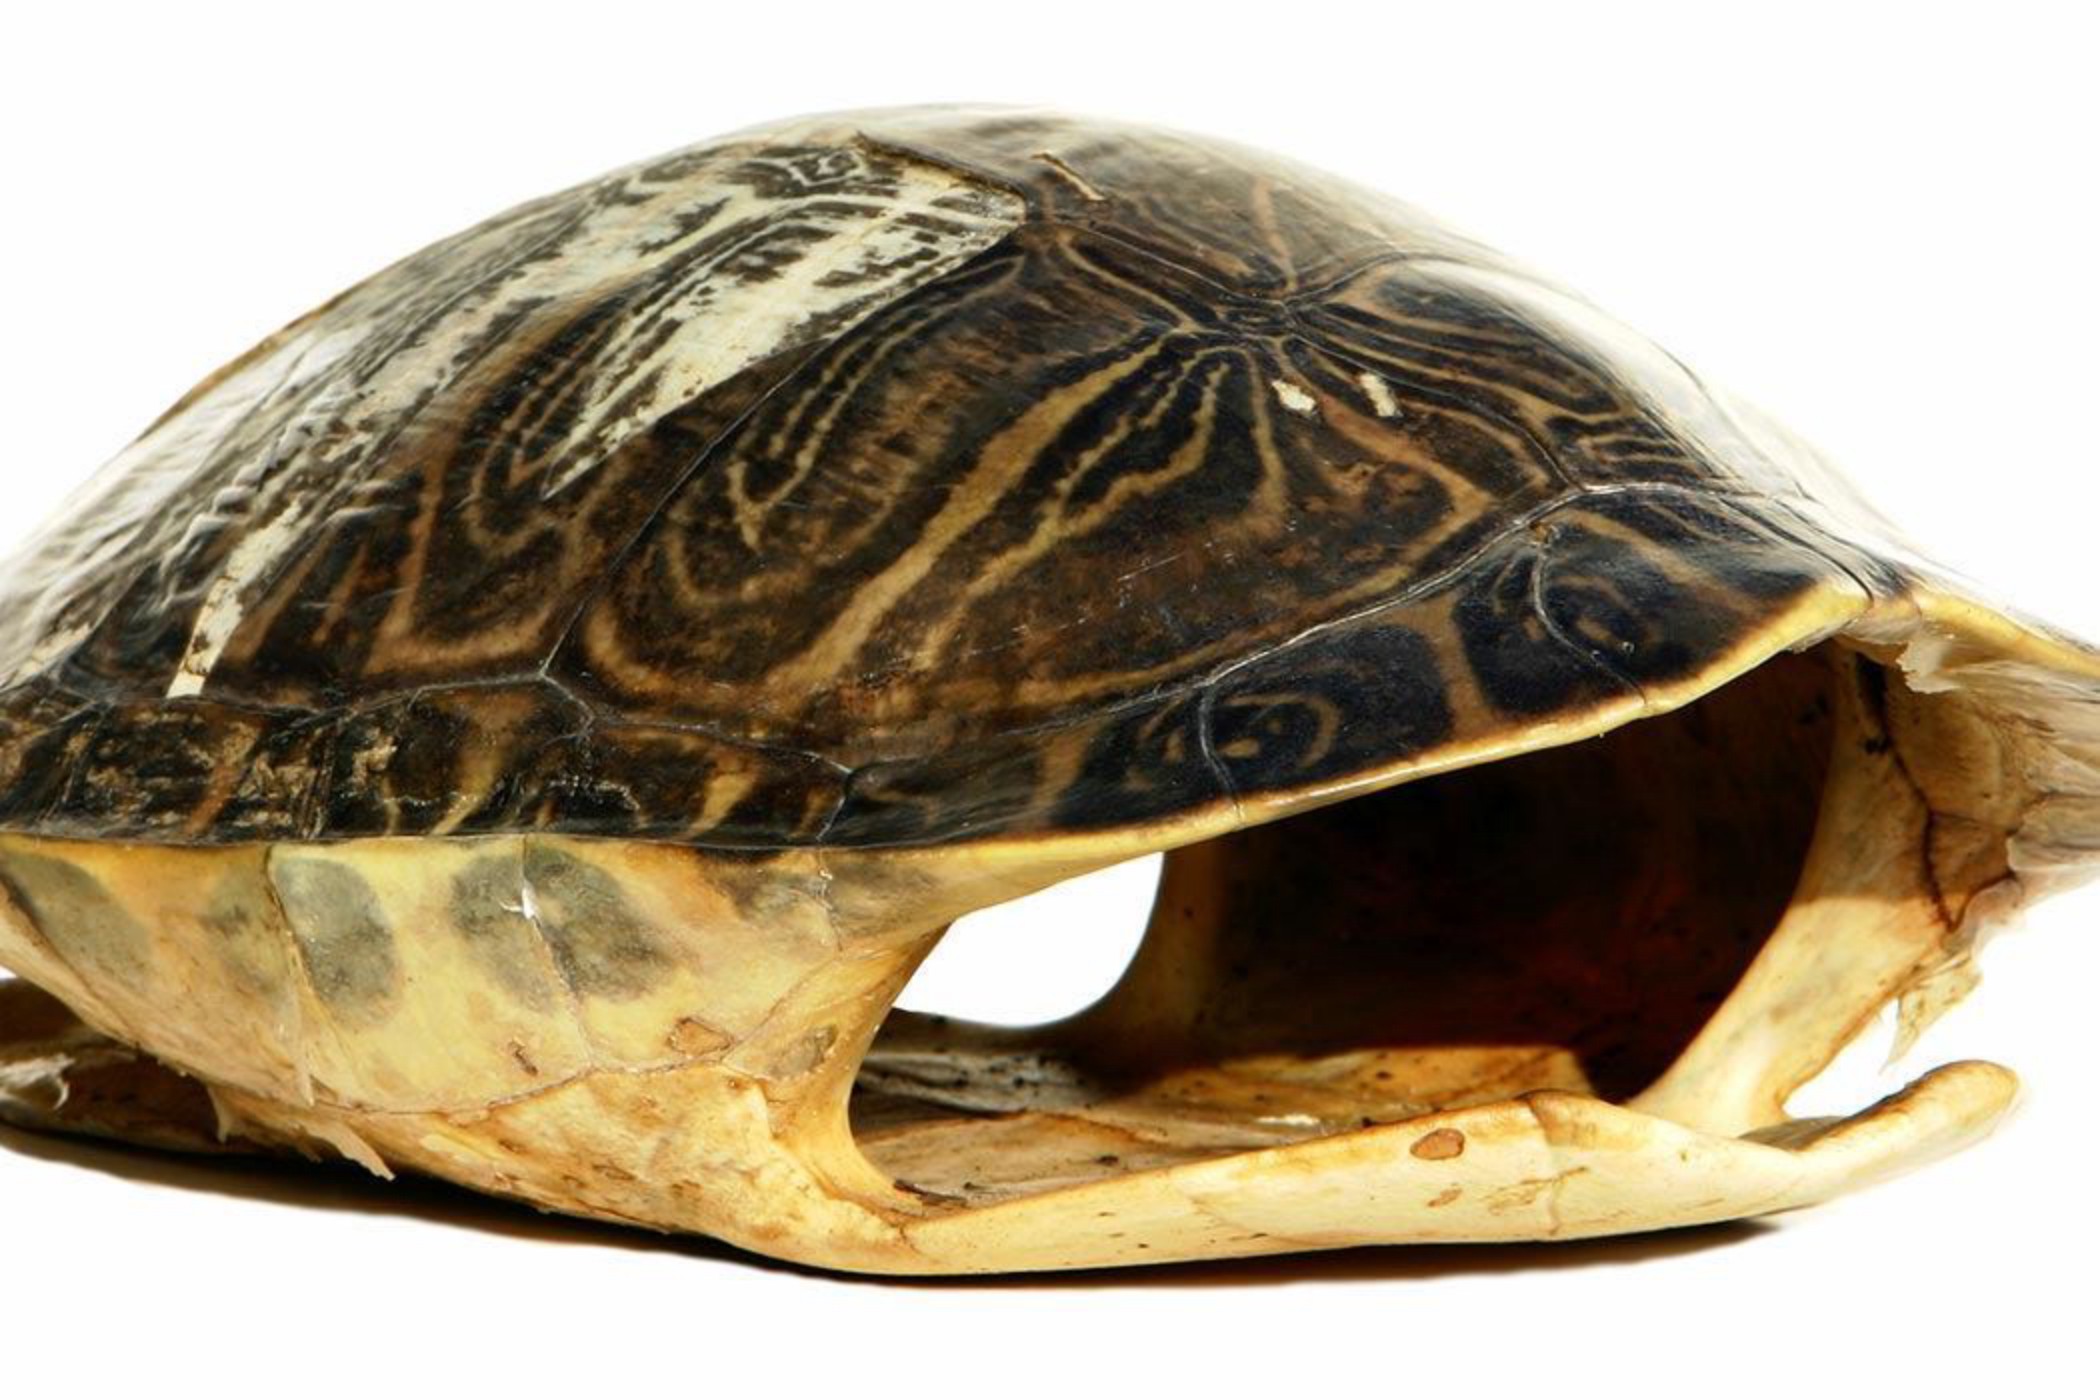 Turtle shell. Черепаха карапакса. Панцирь черепахи. Карапакс у черепахи что это. Черепаший панцирь.